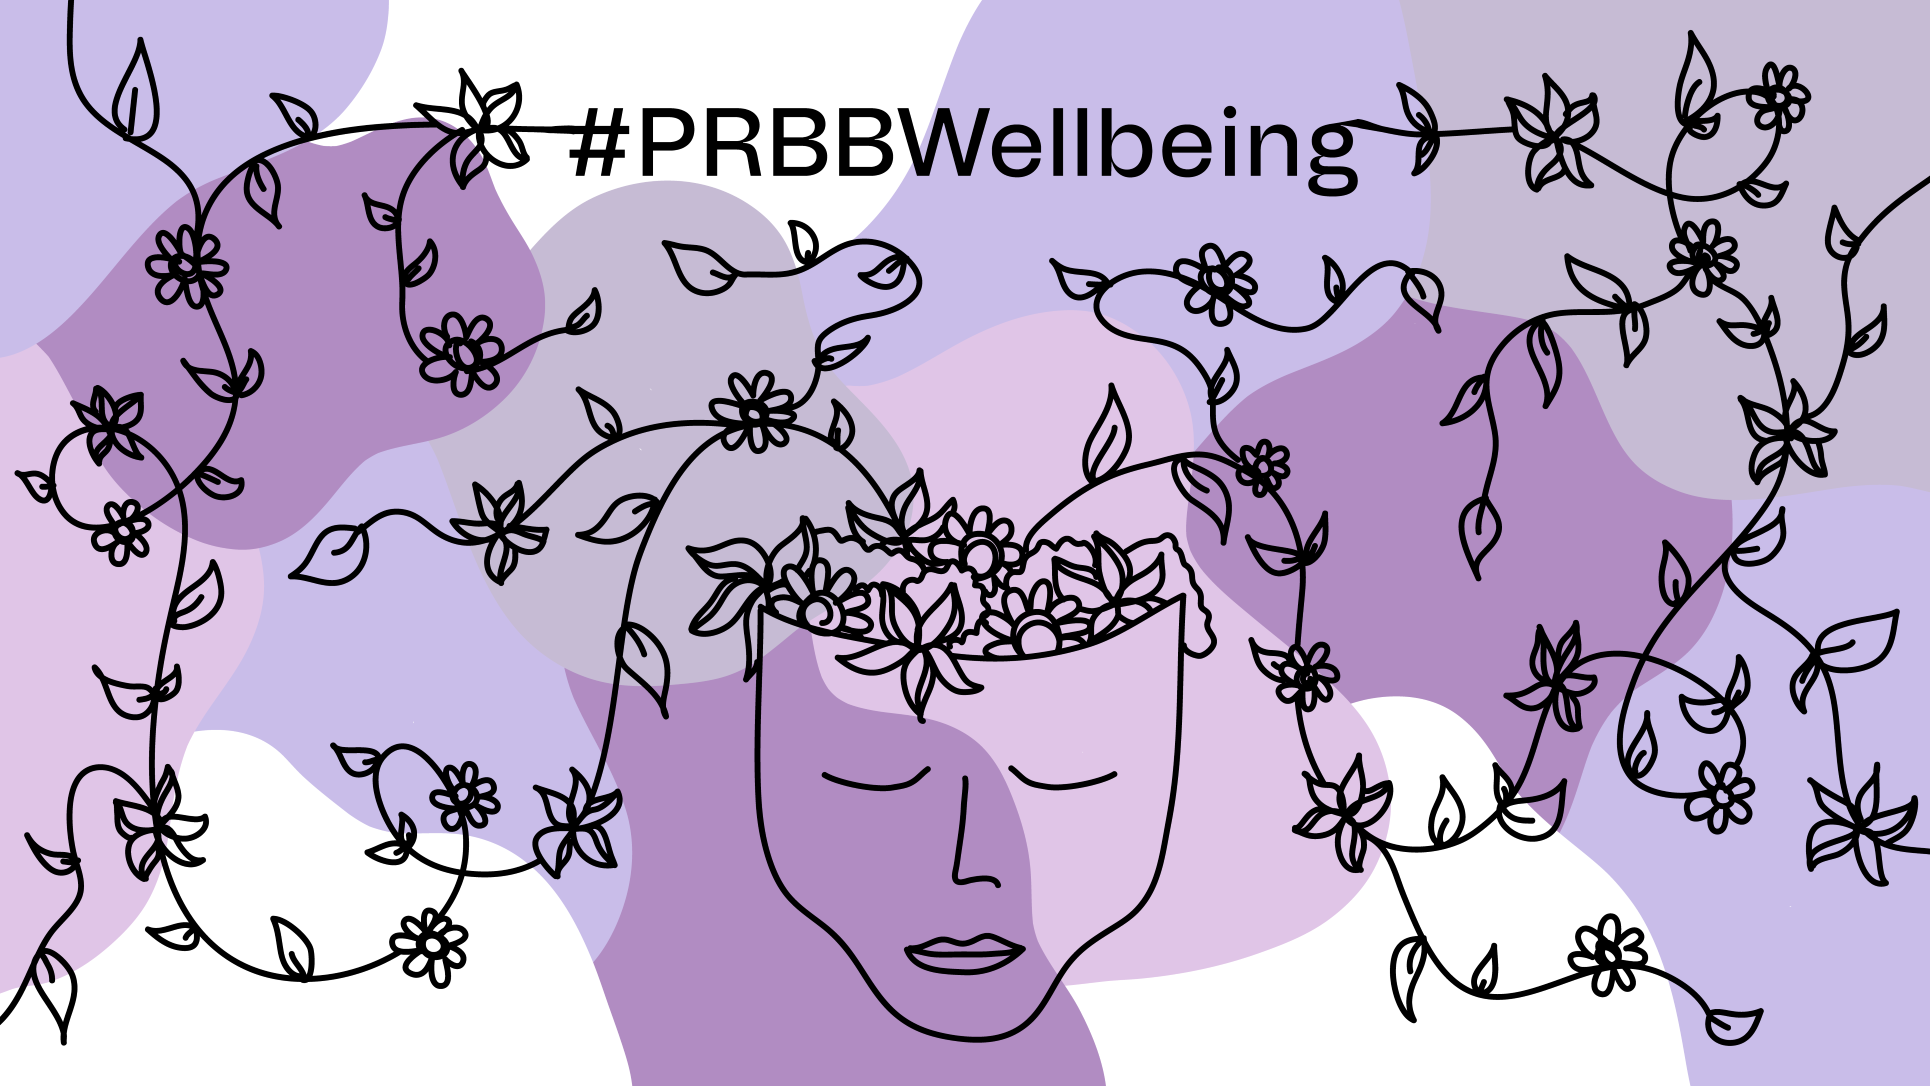 #PRBBWellbeing: focus on mental health